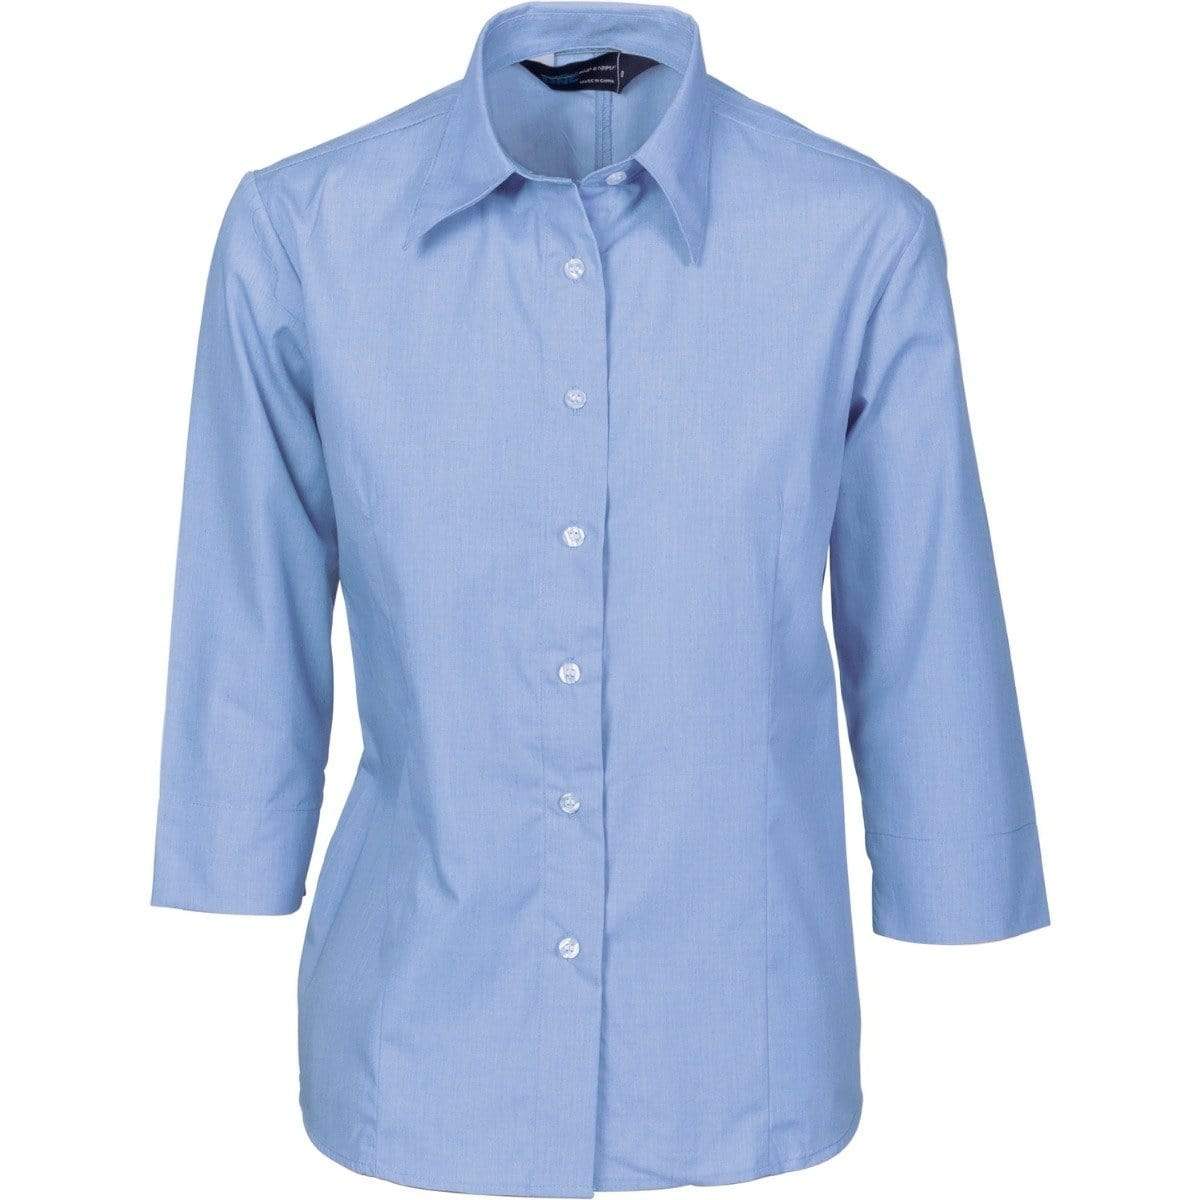 Dnc Workwear Regular Collar 3/4 Sleeve Blouse - 4213 Corporate Wear DNC Workwear Blue Chambray 6 